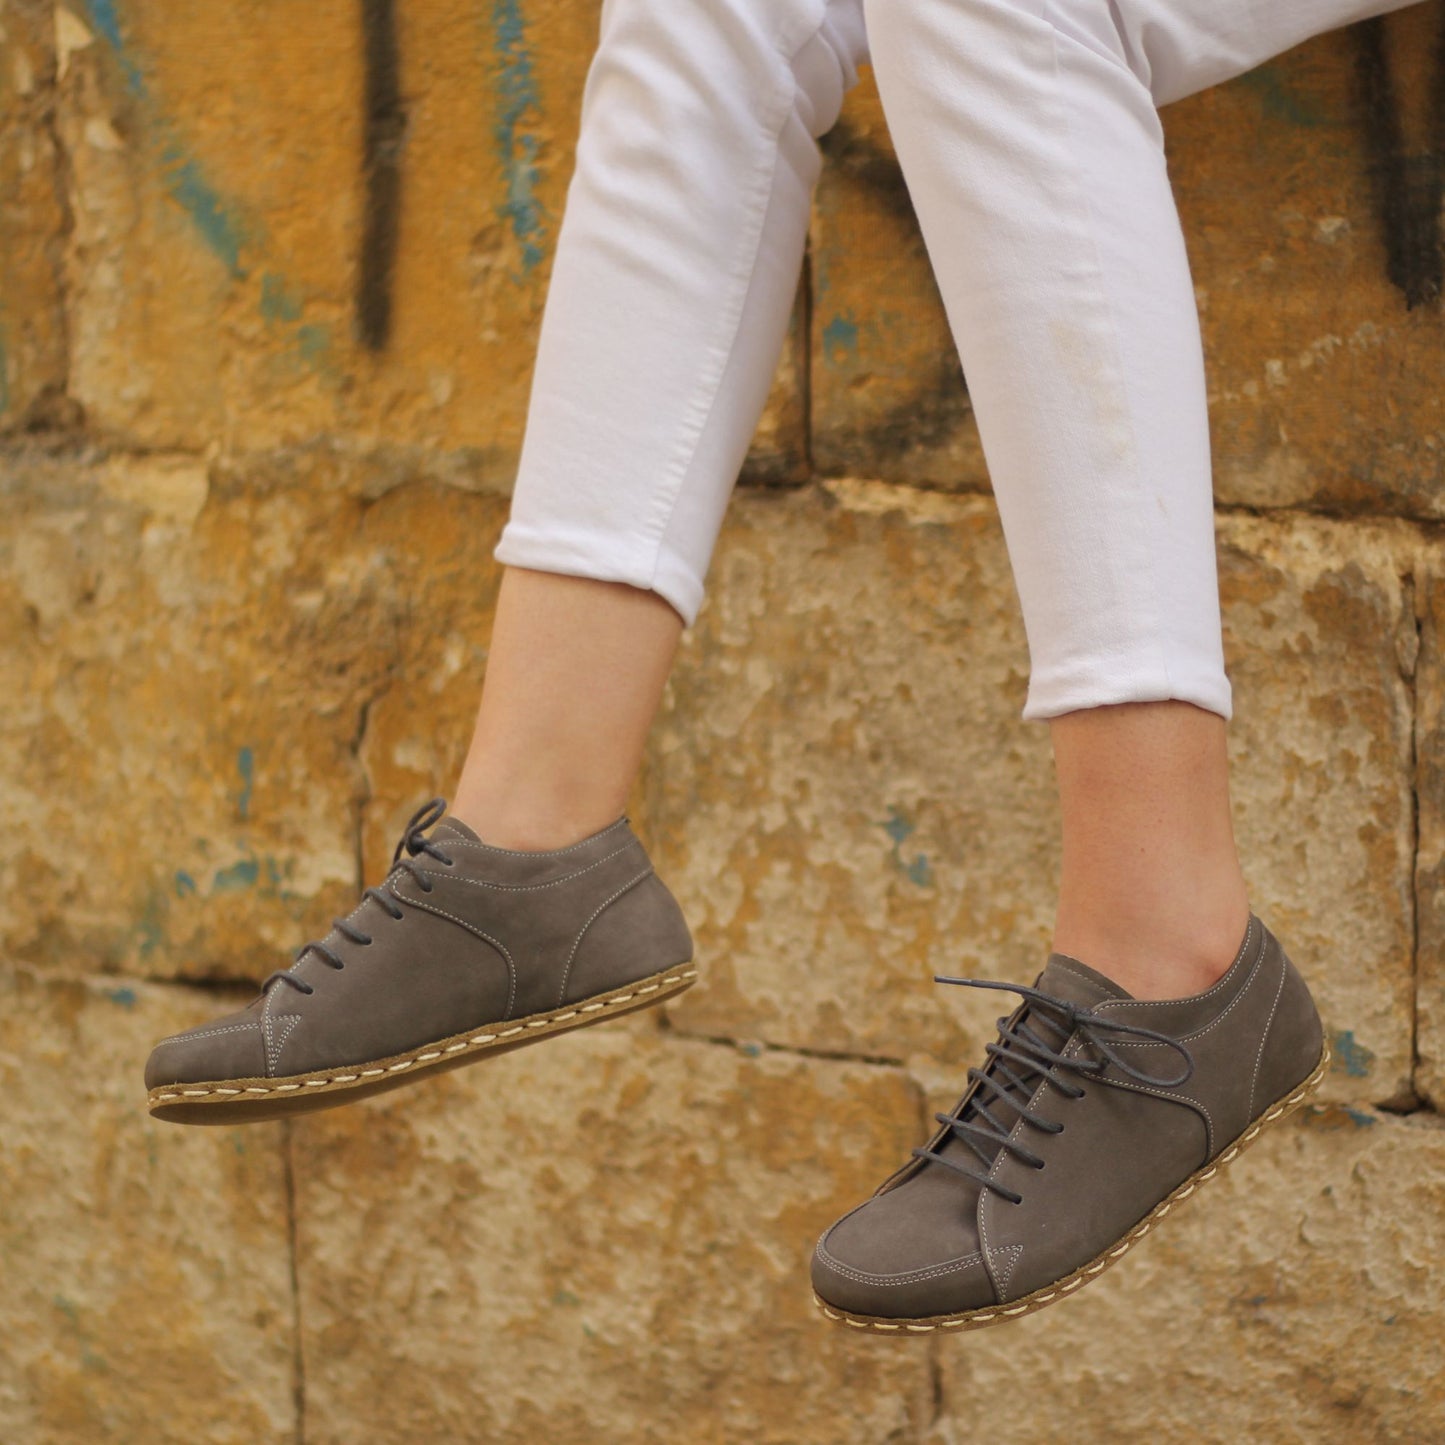 Gray Nubuck Leather Barefoot Sneakers for Women - Handmade, Rare Buffalo Leather